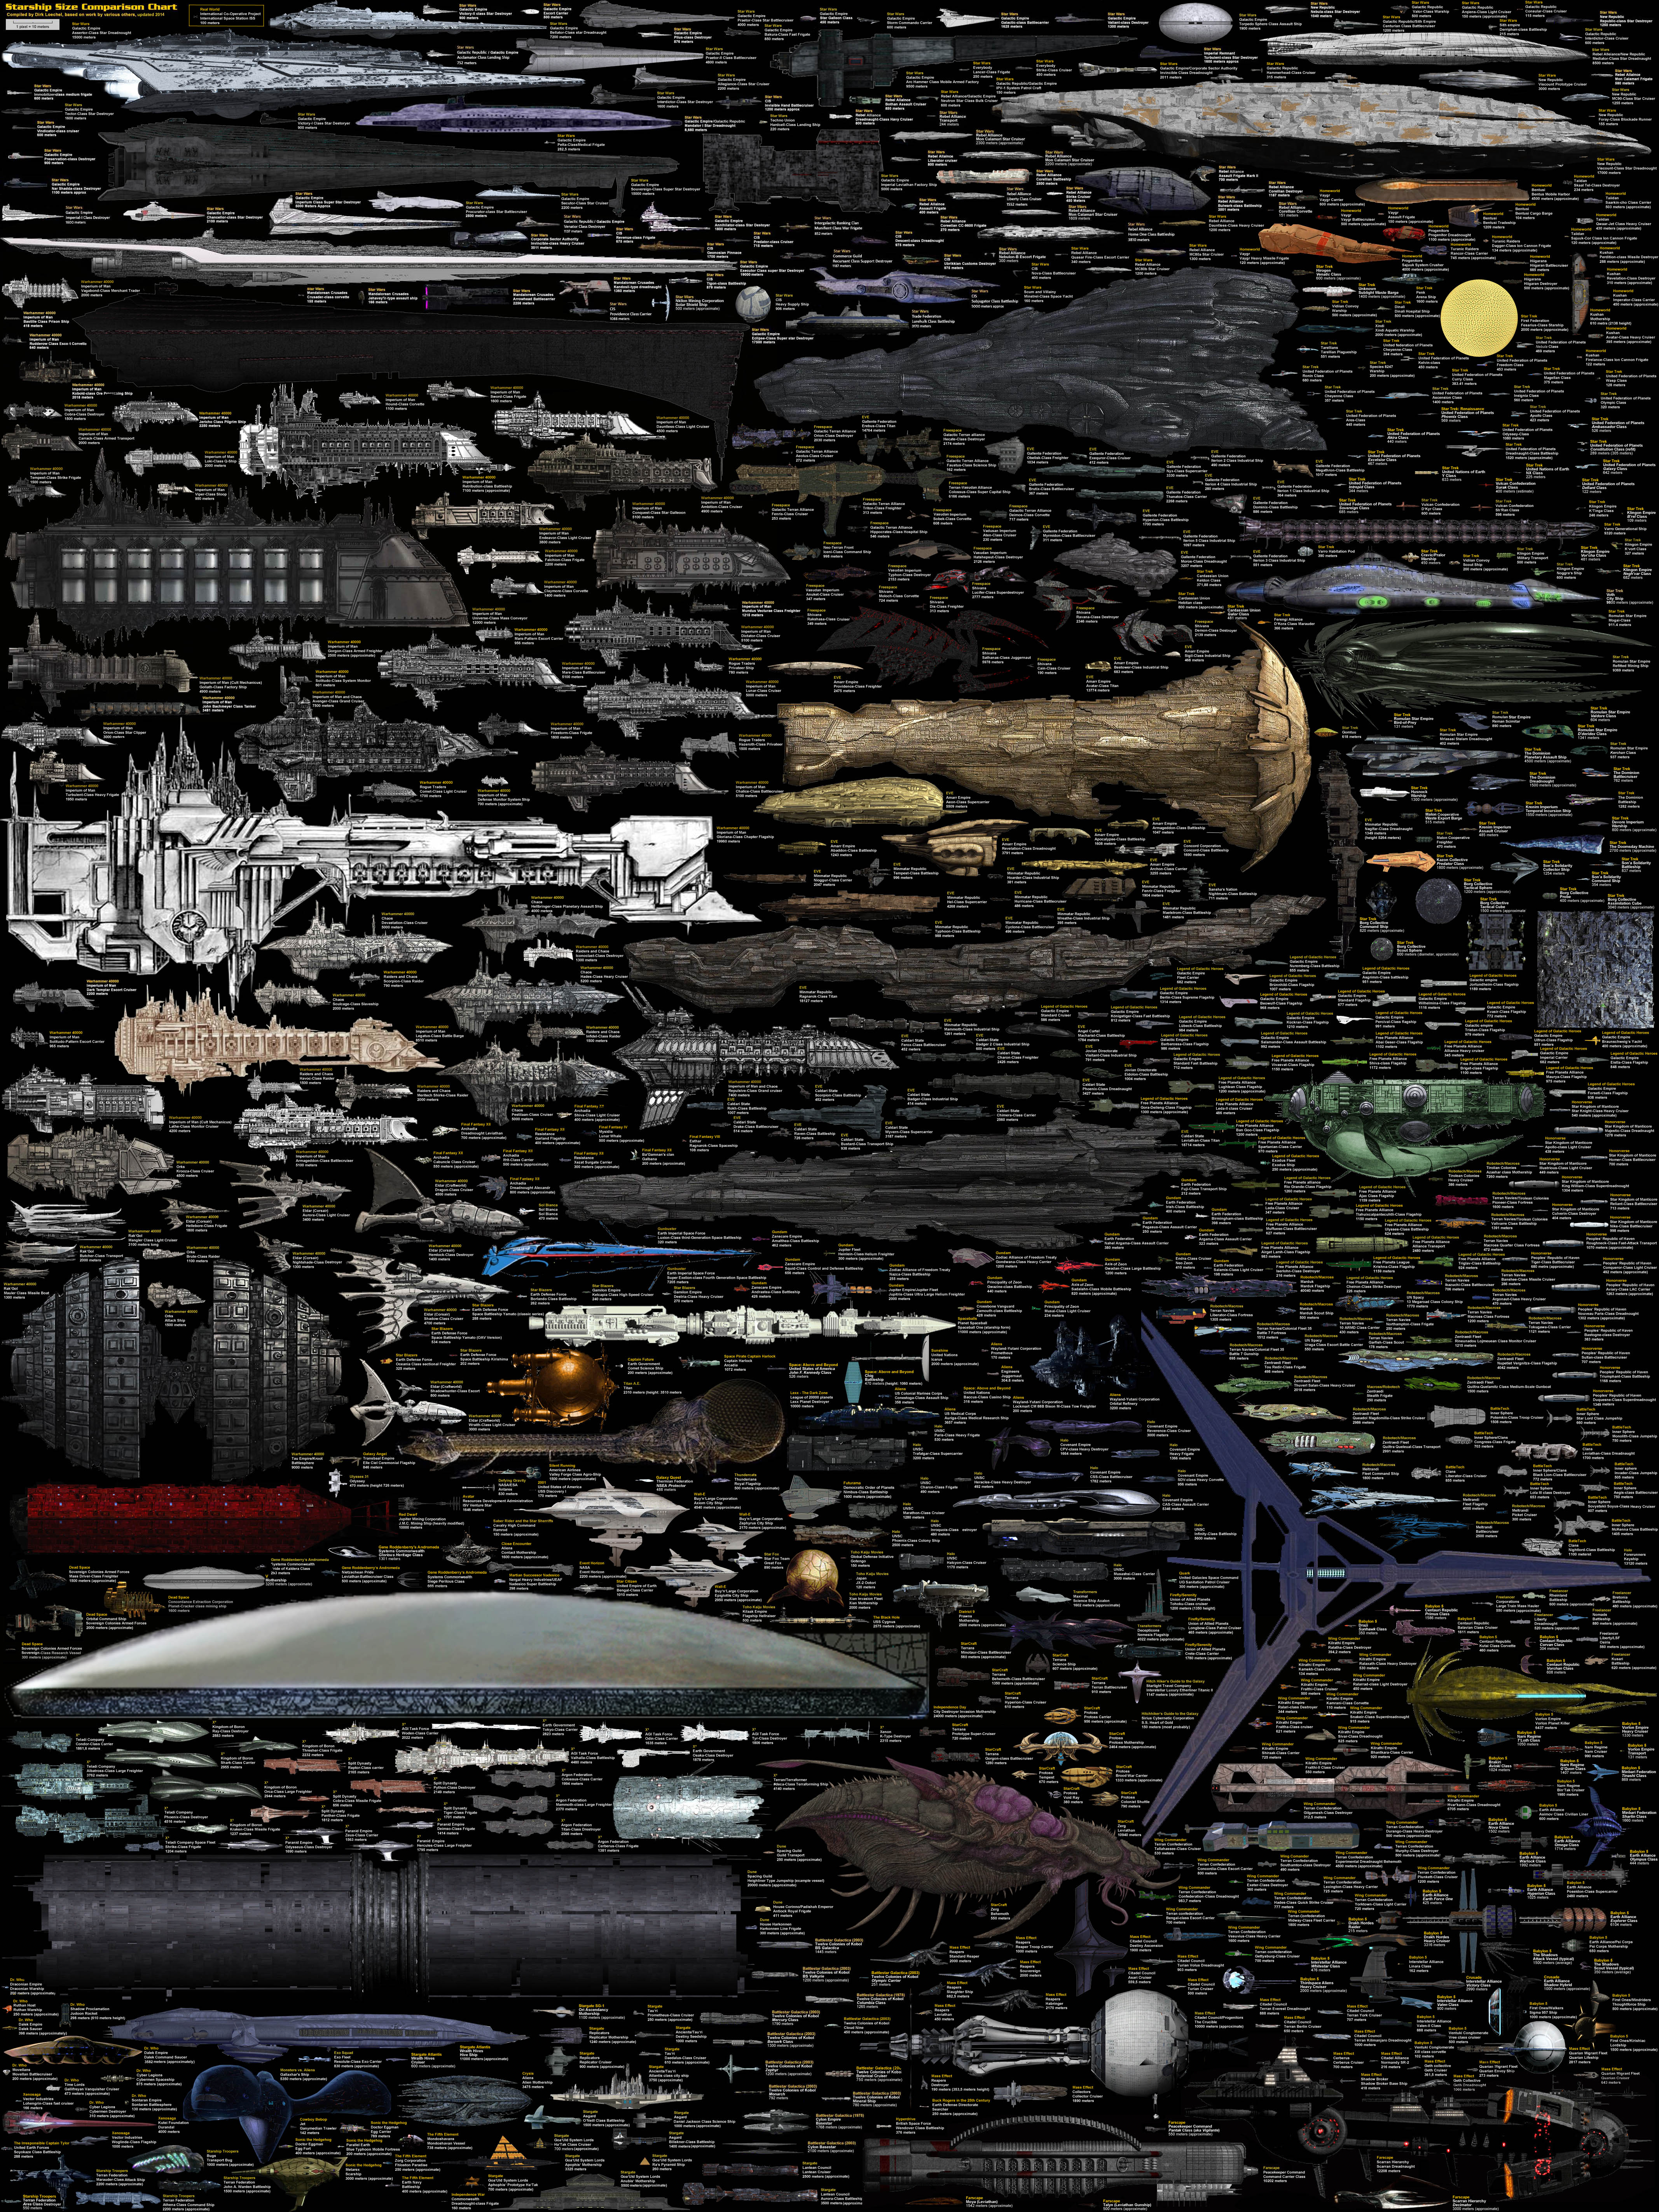 Size Comparison - Science Fiction Spaceships by DirkLoechel on DeviantArt